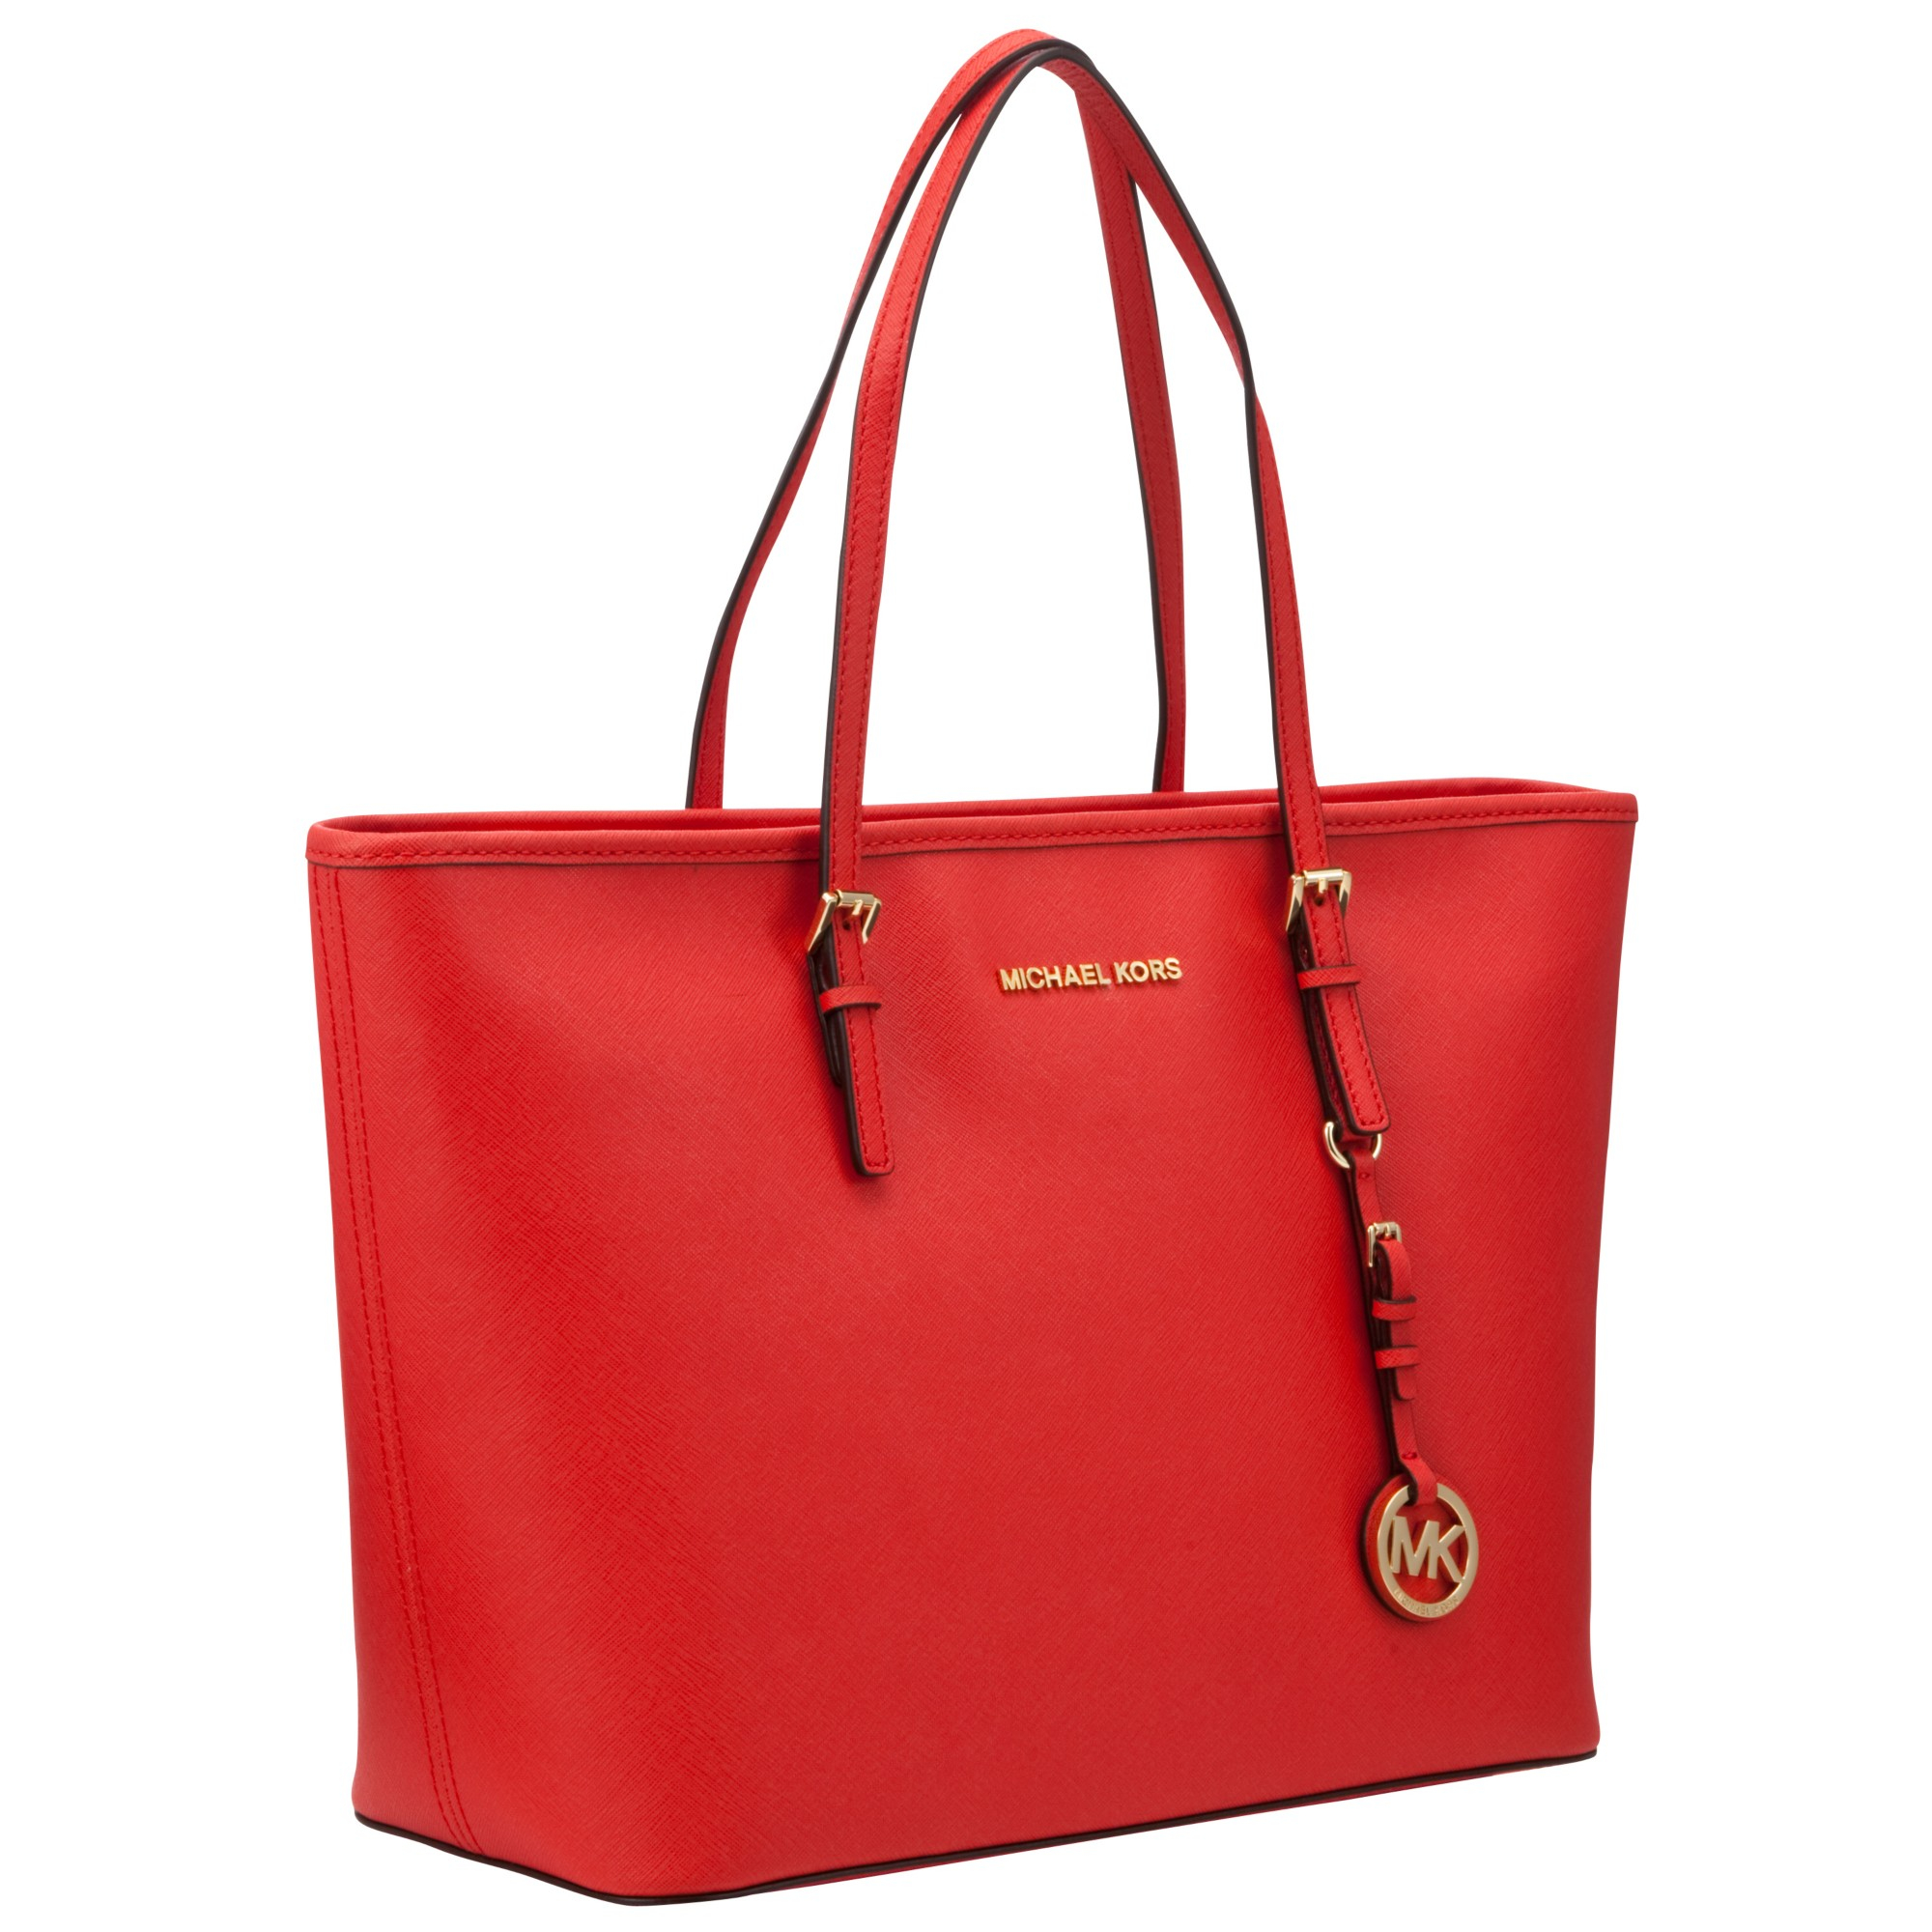 Michael Michael Kors Jet Set Travel Leather Tote Handbag in Red (Optic) | Lyst